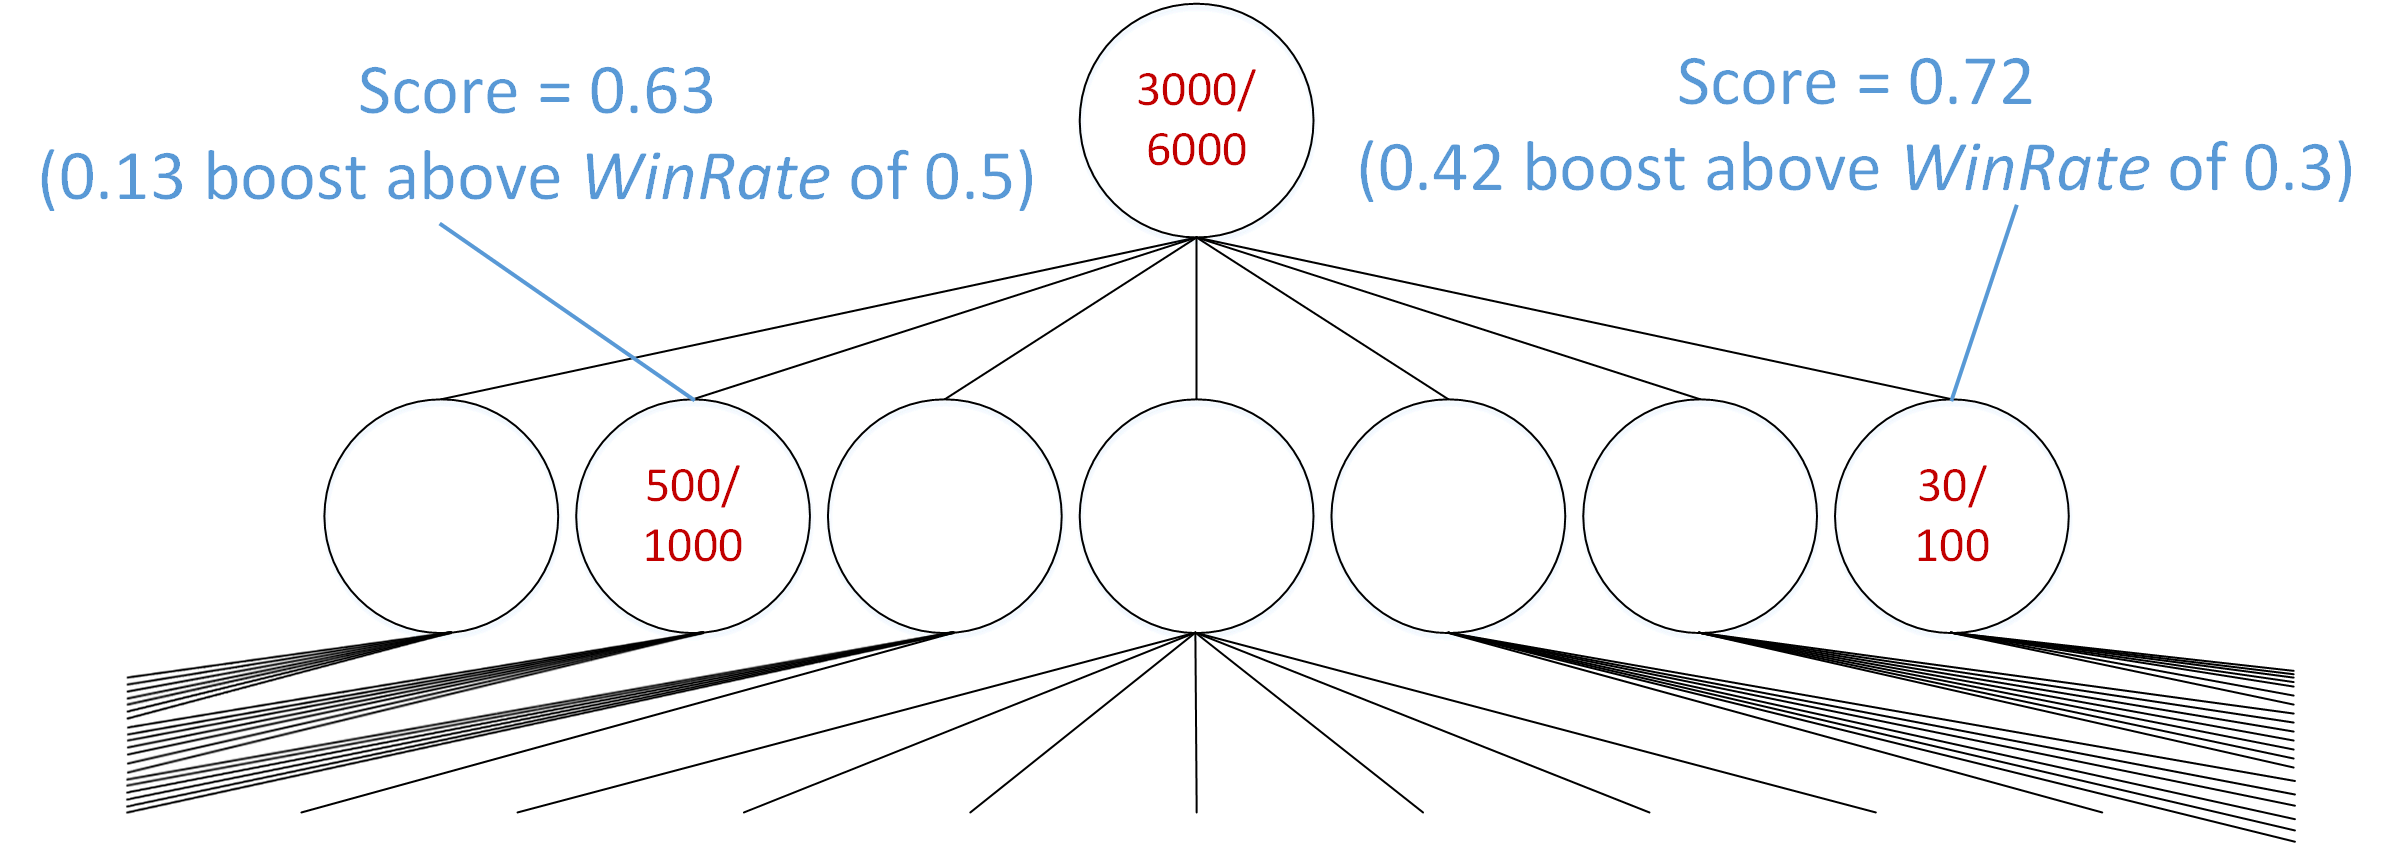 The $c \cdot \sqrt{ \frac{2 \cdot \ln{Parent Simulations}}{Node Simulations}  }$ term boosts the score of a node with only 100 simulations above the score of a node with 1,000 simulations.